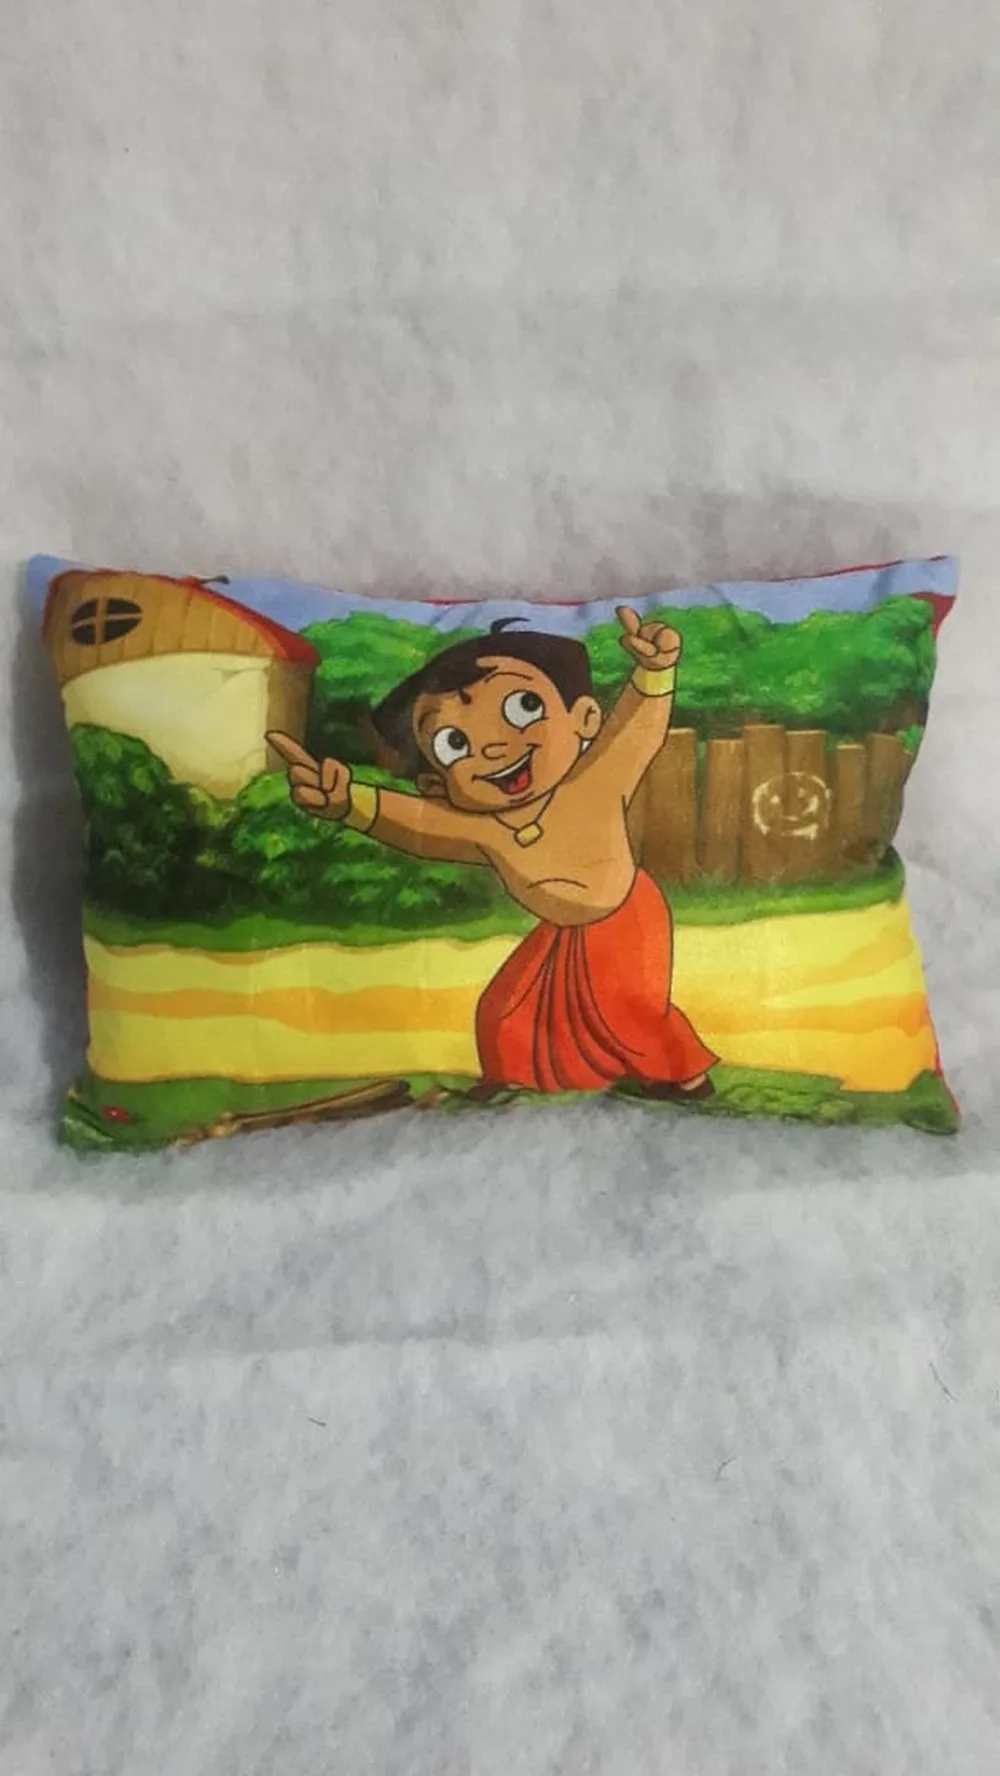 Kids Cartoon Pillow Chhota Bheem, 11x17, 1 Piece, Colorful